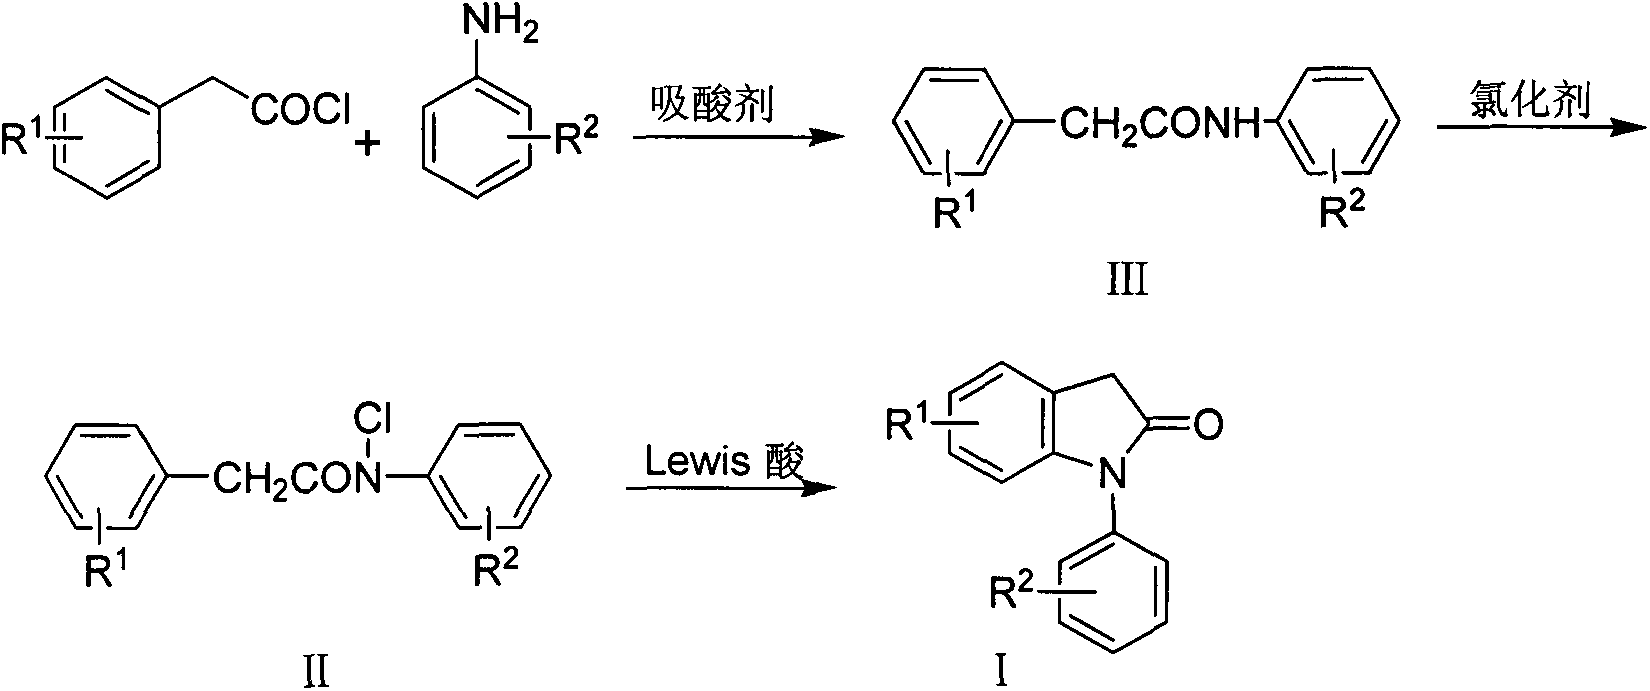 Preparation method for 1-aryl-2-indolinone derivatives